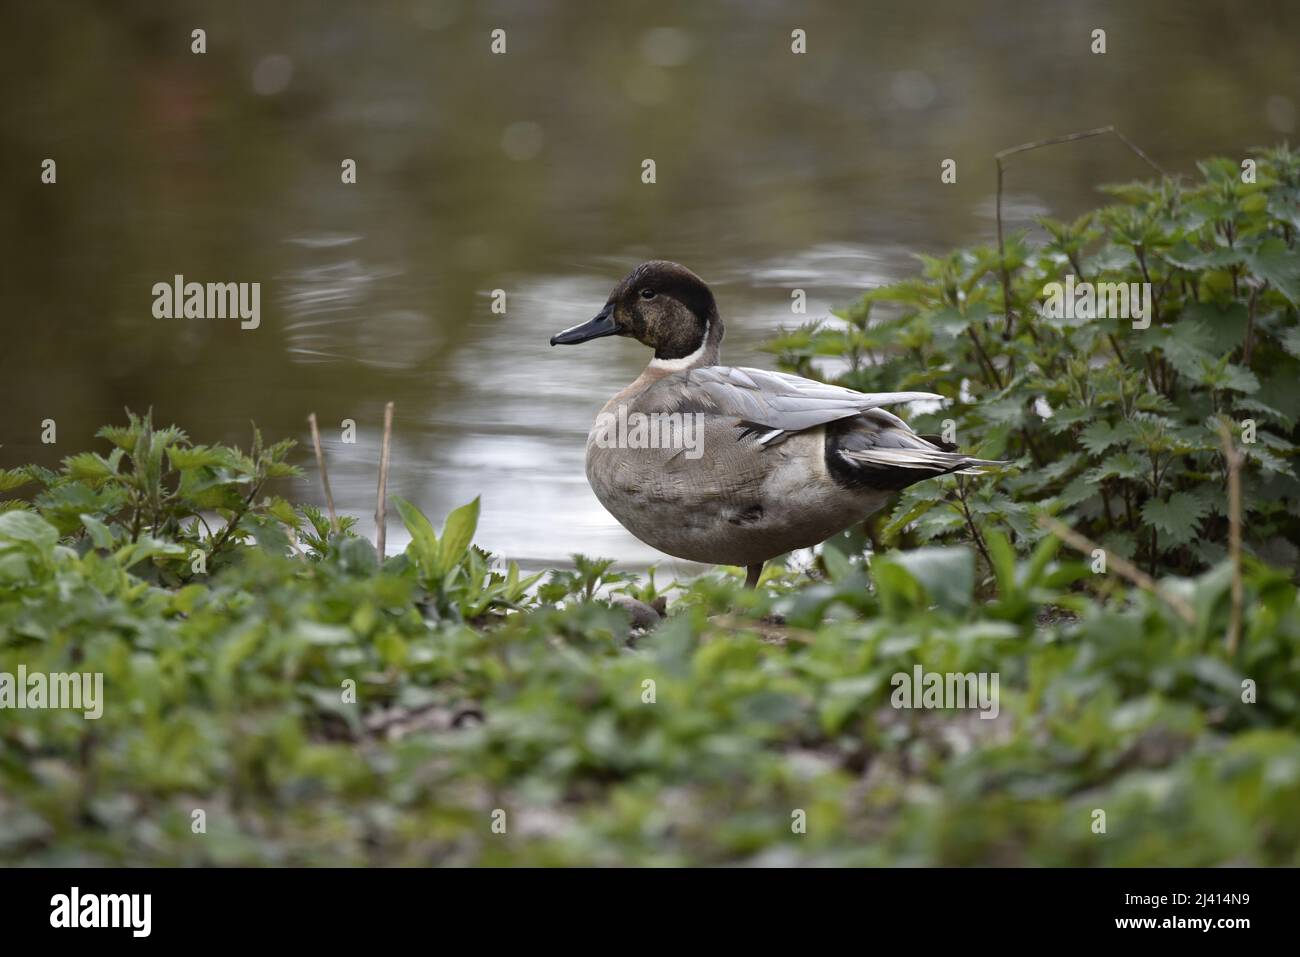 Northern Pintail (Anas acuta) x Gadwall (Anas strepara) Duck ibrido a destra dell'immagine guardando a sinistra dell'immagine, in piedi sul prato contro sfondo del lago Foto Stock